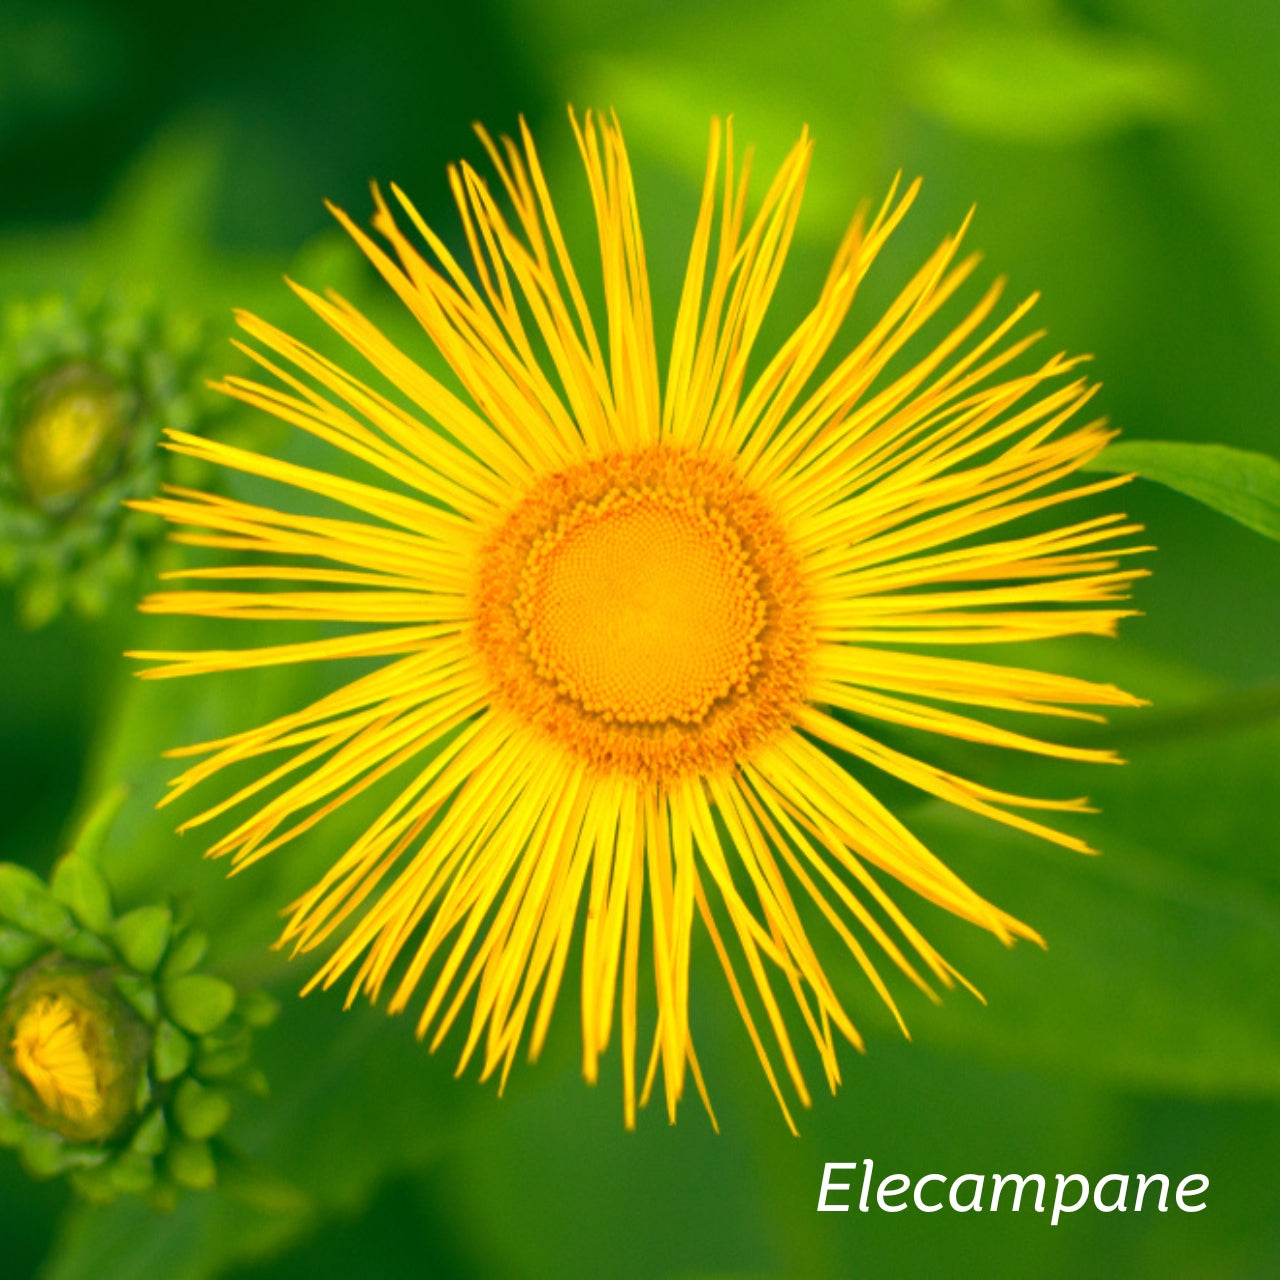 Closeup image of a yellow Elecampane flower. 